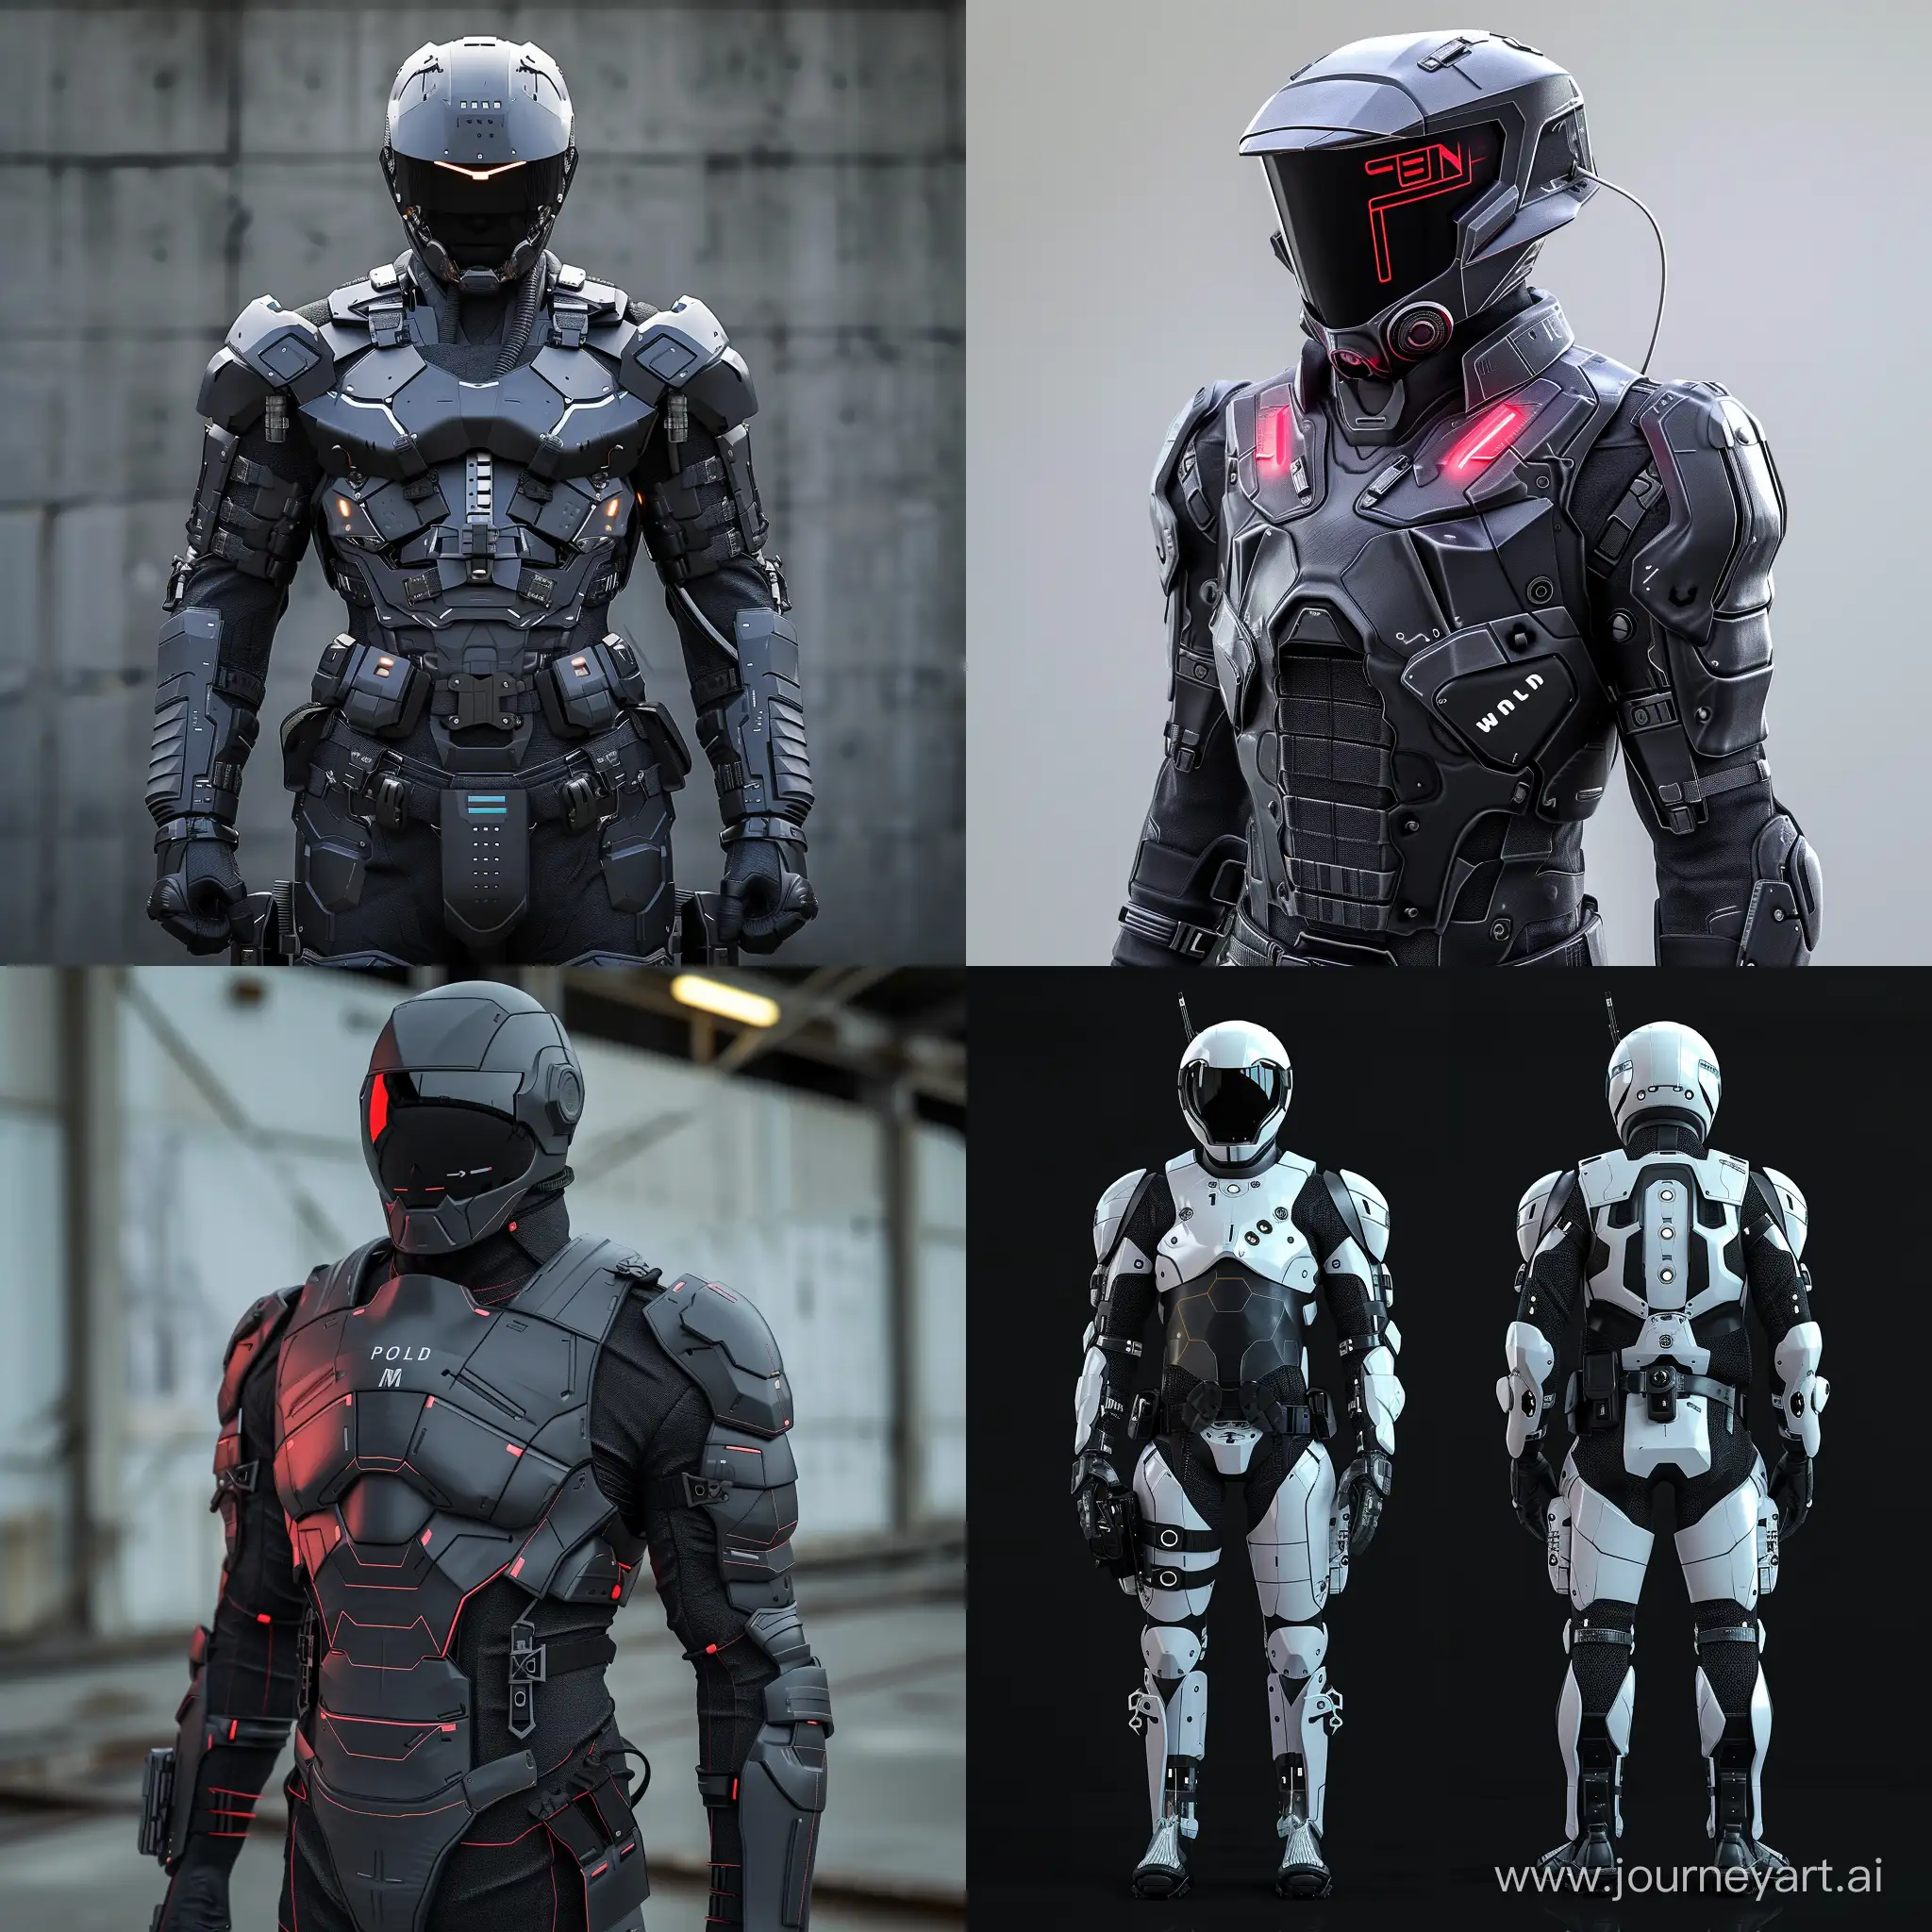 Futuristic cop costume, in cinematic futuristic cybernetic style, in cinematic futuristic cyber style